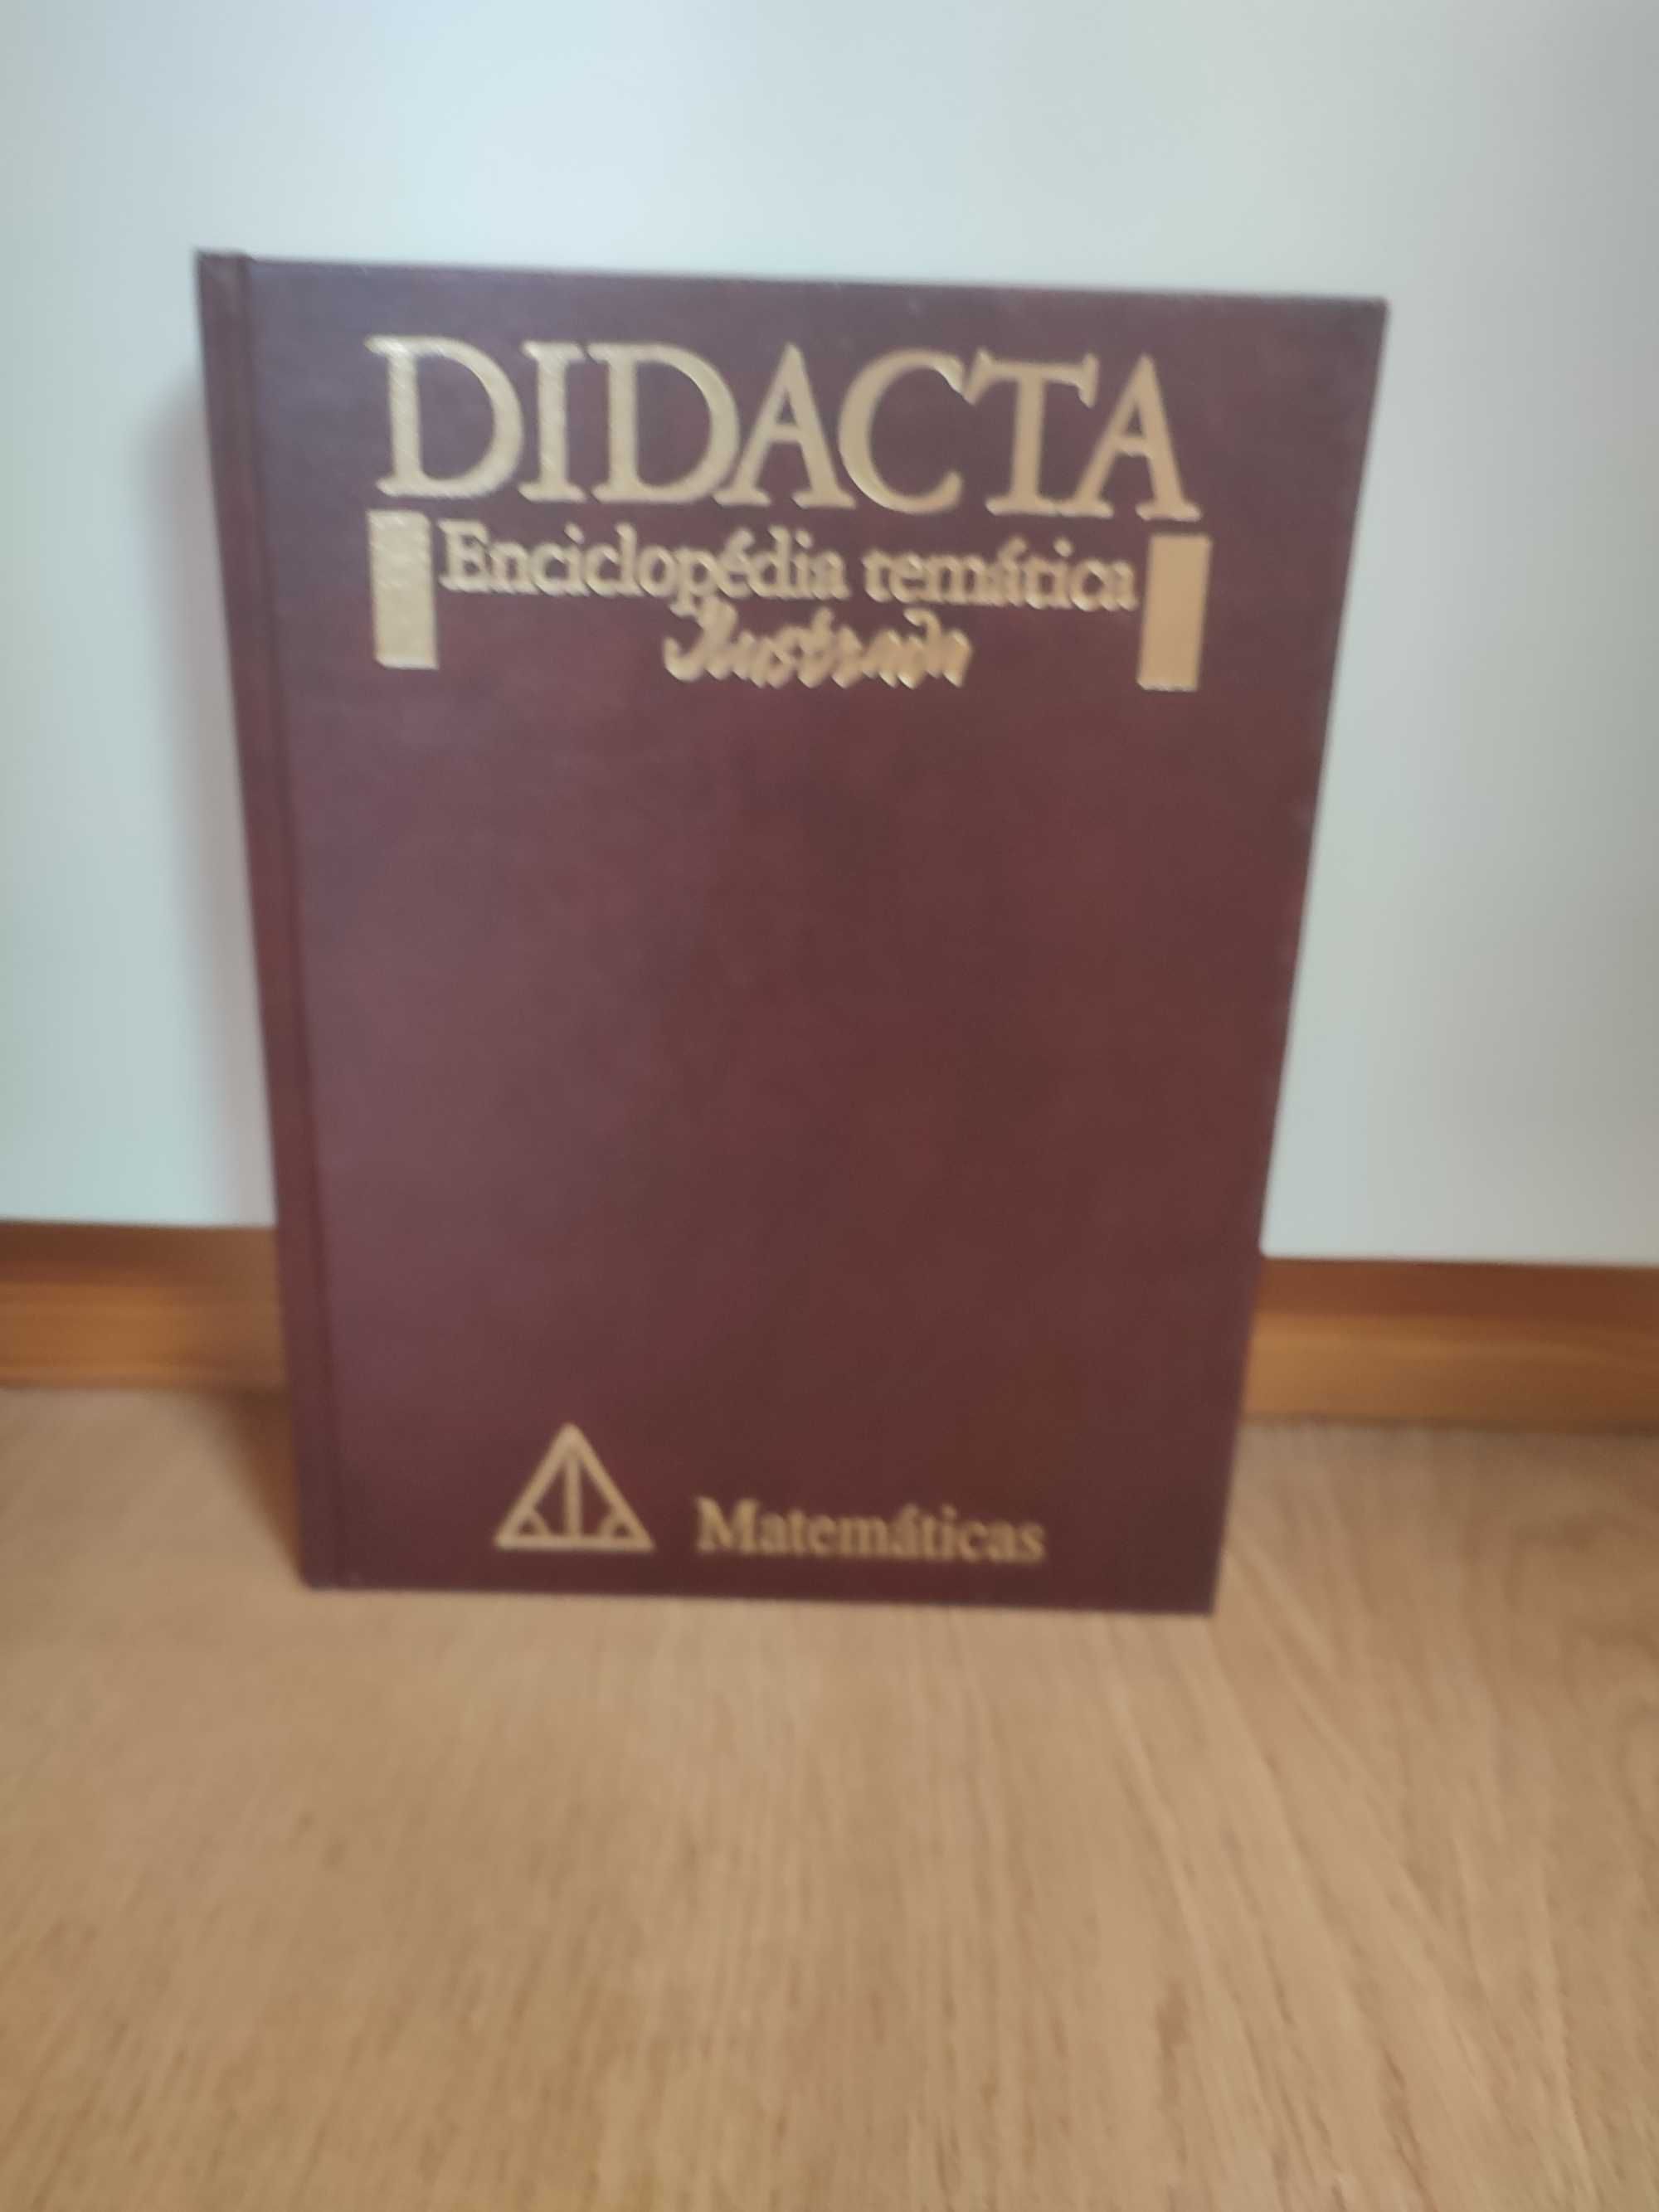 DIDACTA Enciclopédia temática